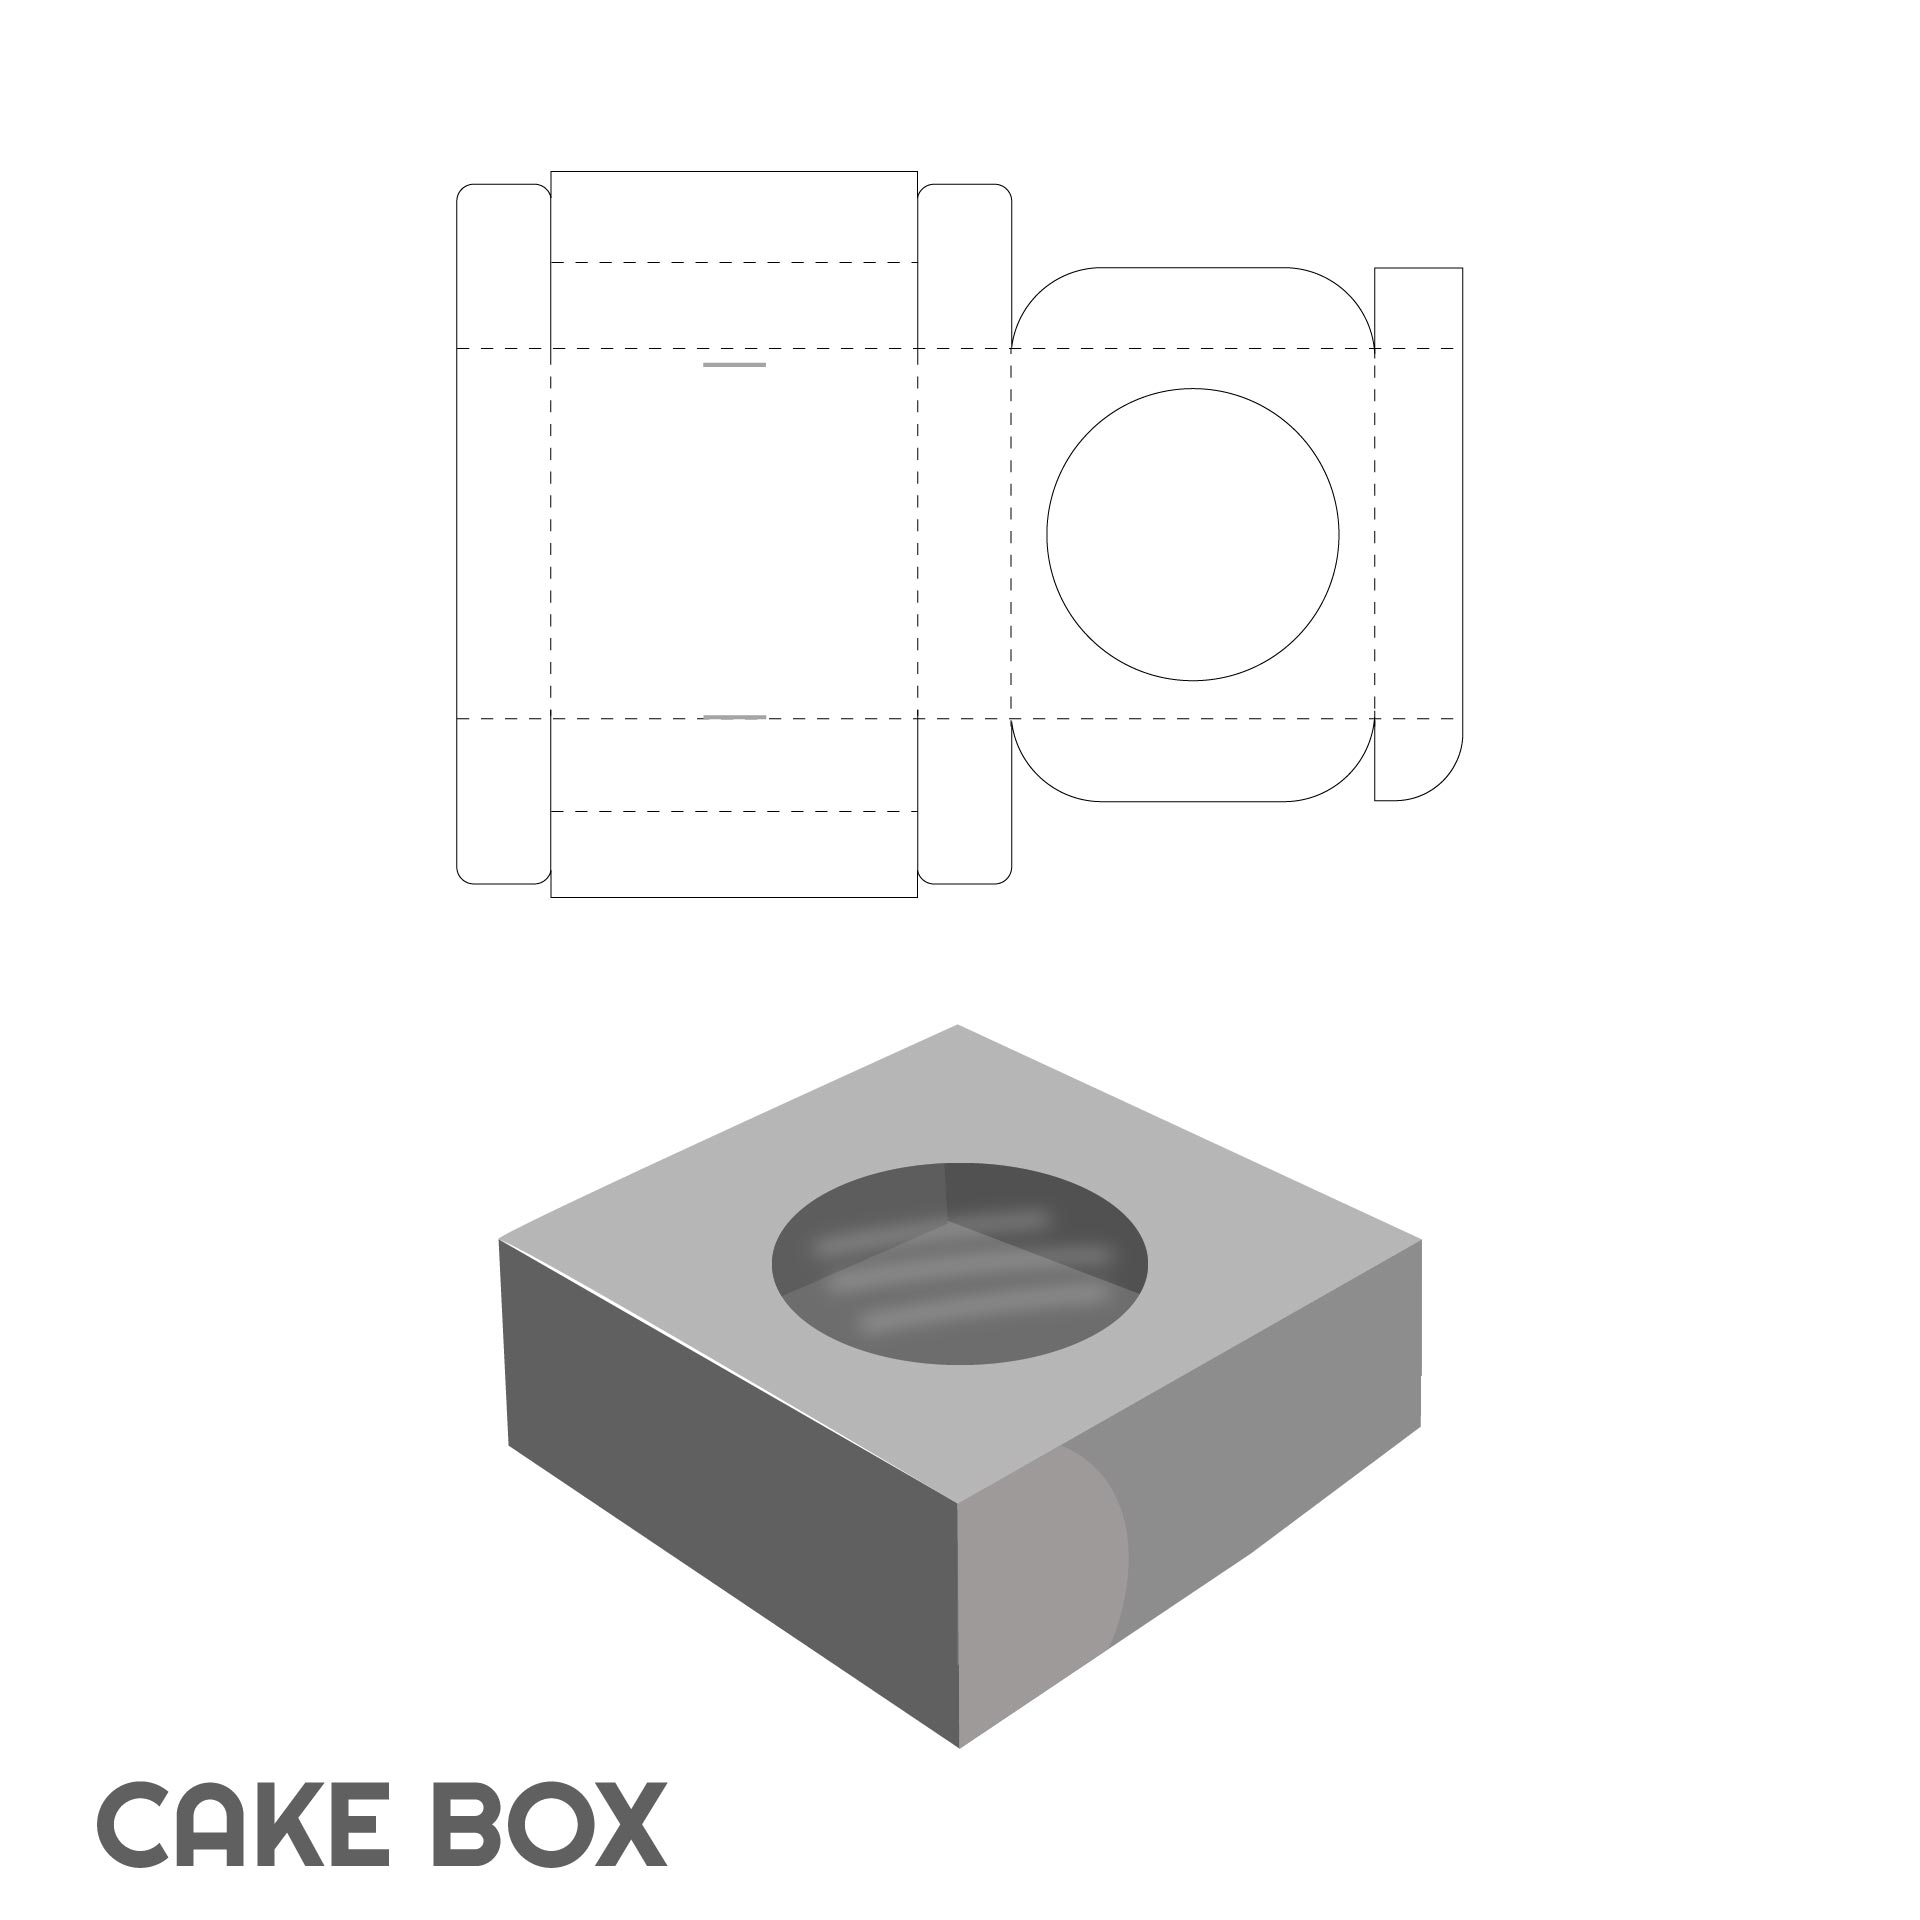 Window Cake Box Template